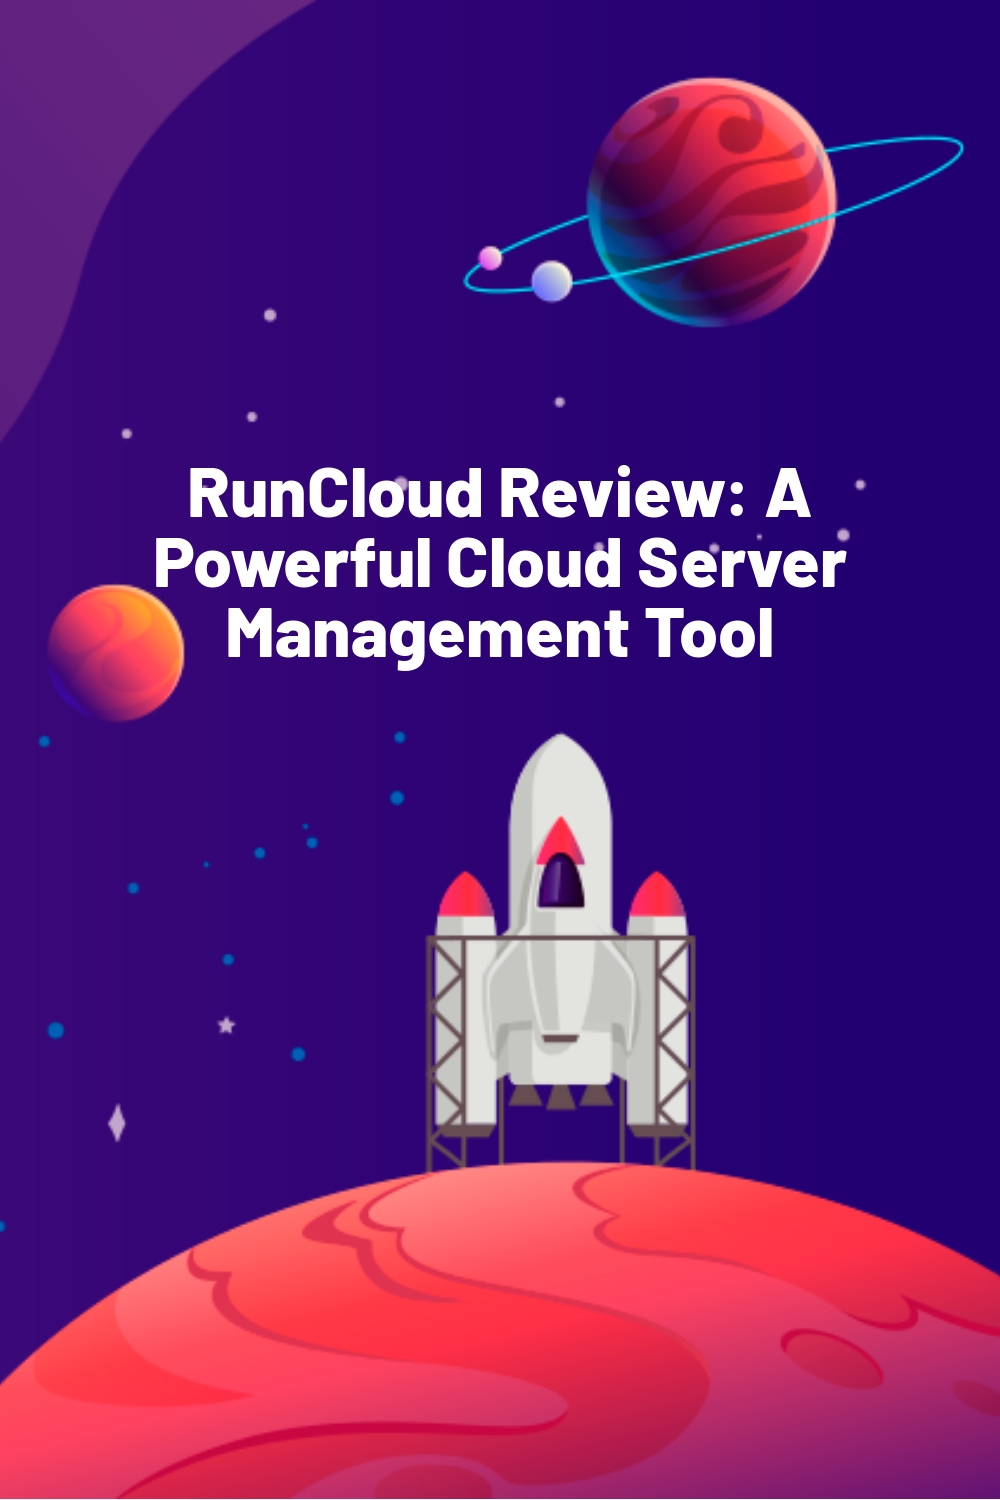 RunCloud Review: A Powerful Cloud Server Management Tool